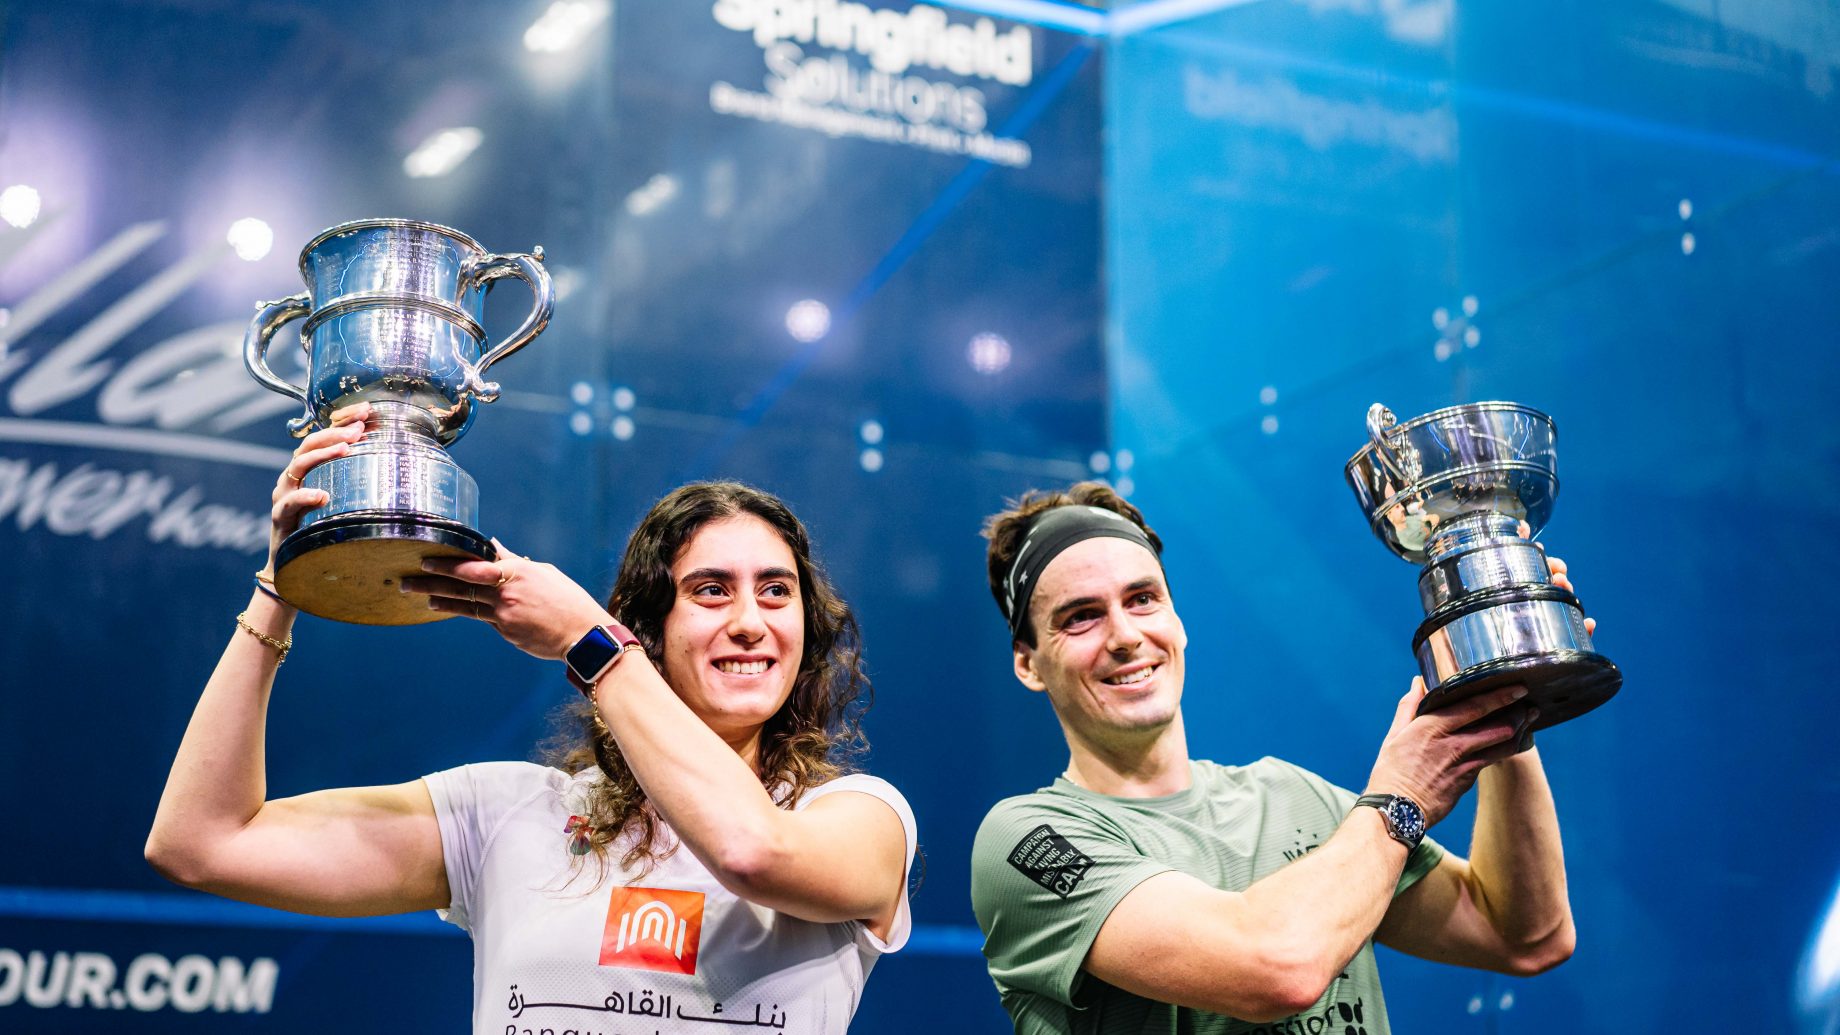 Nour El Sherbini & Paul Coll lifting the trophies